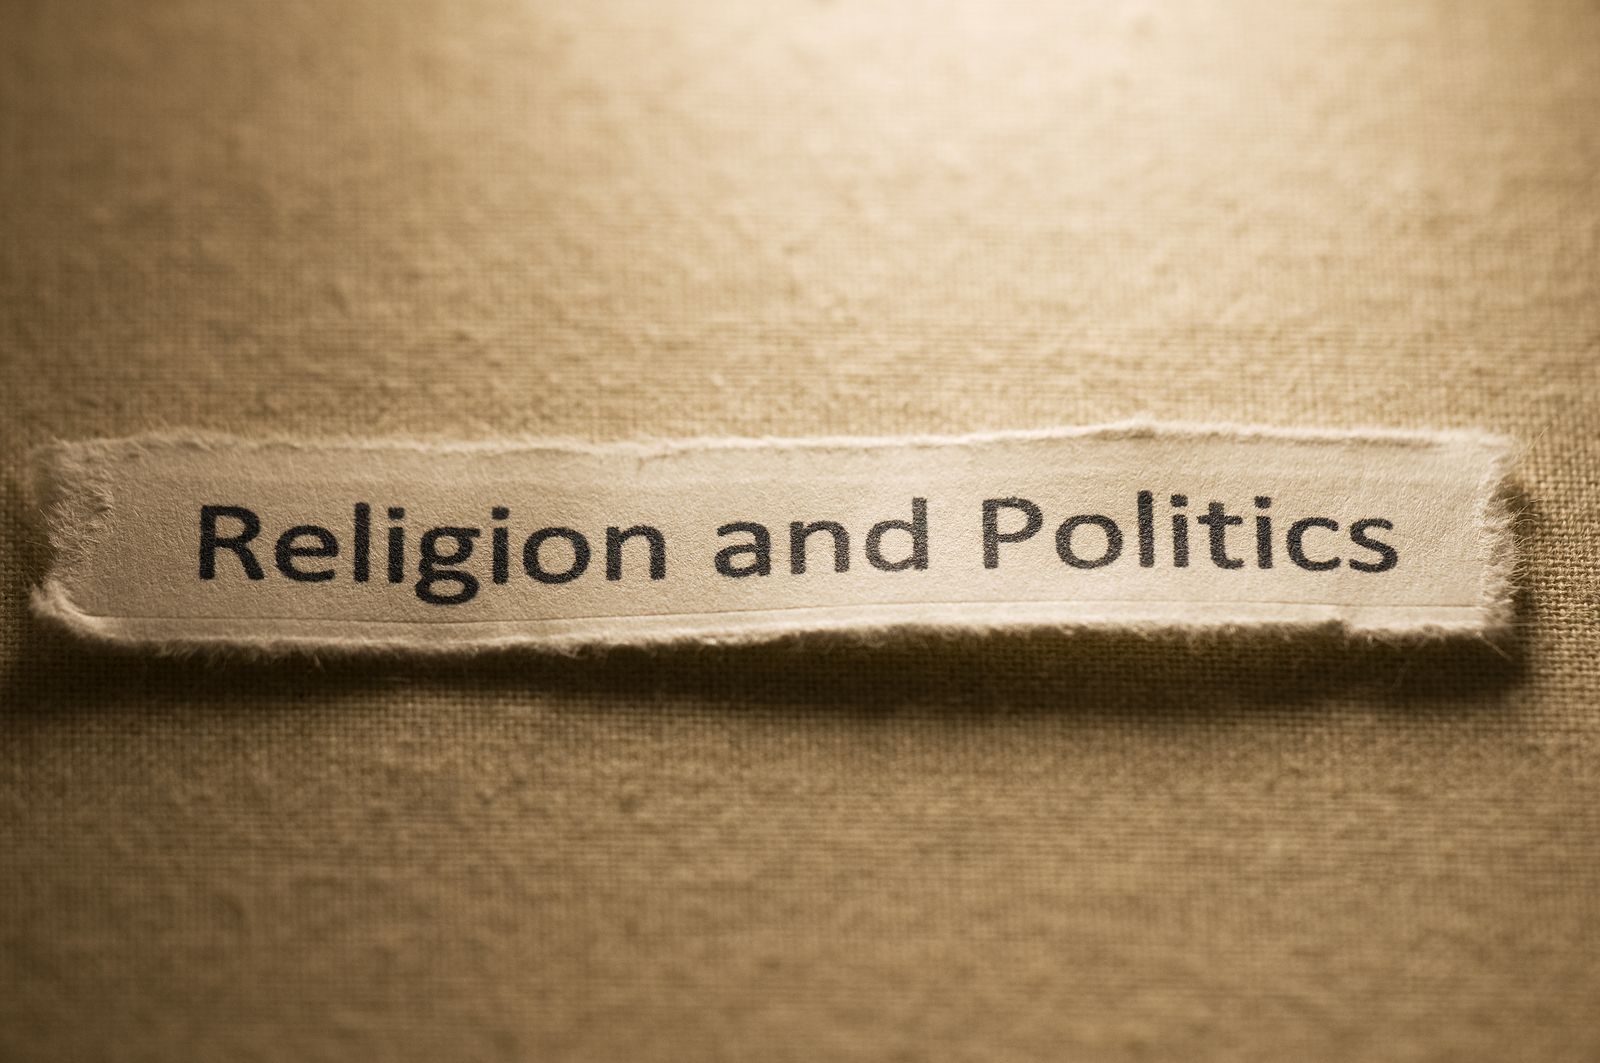 bigstock-Religion-and-Politics-24431498.jpg